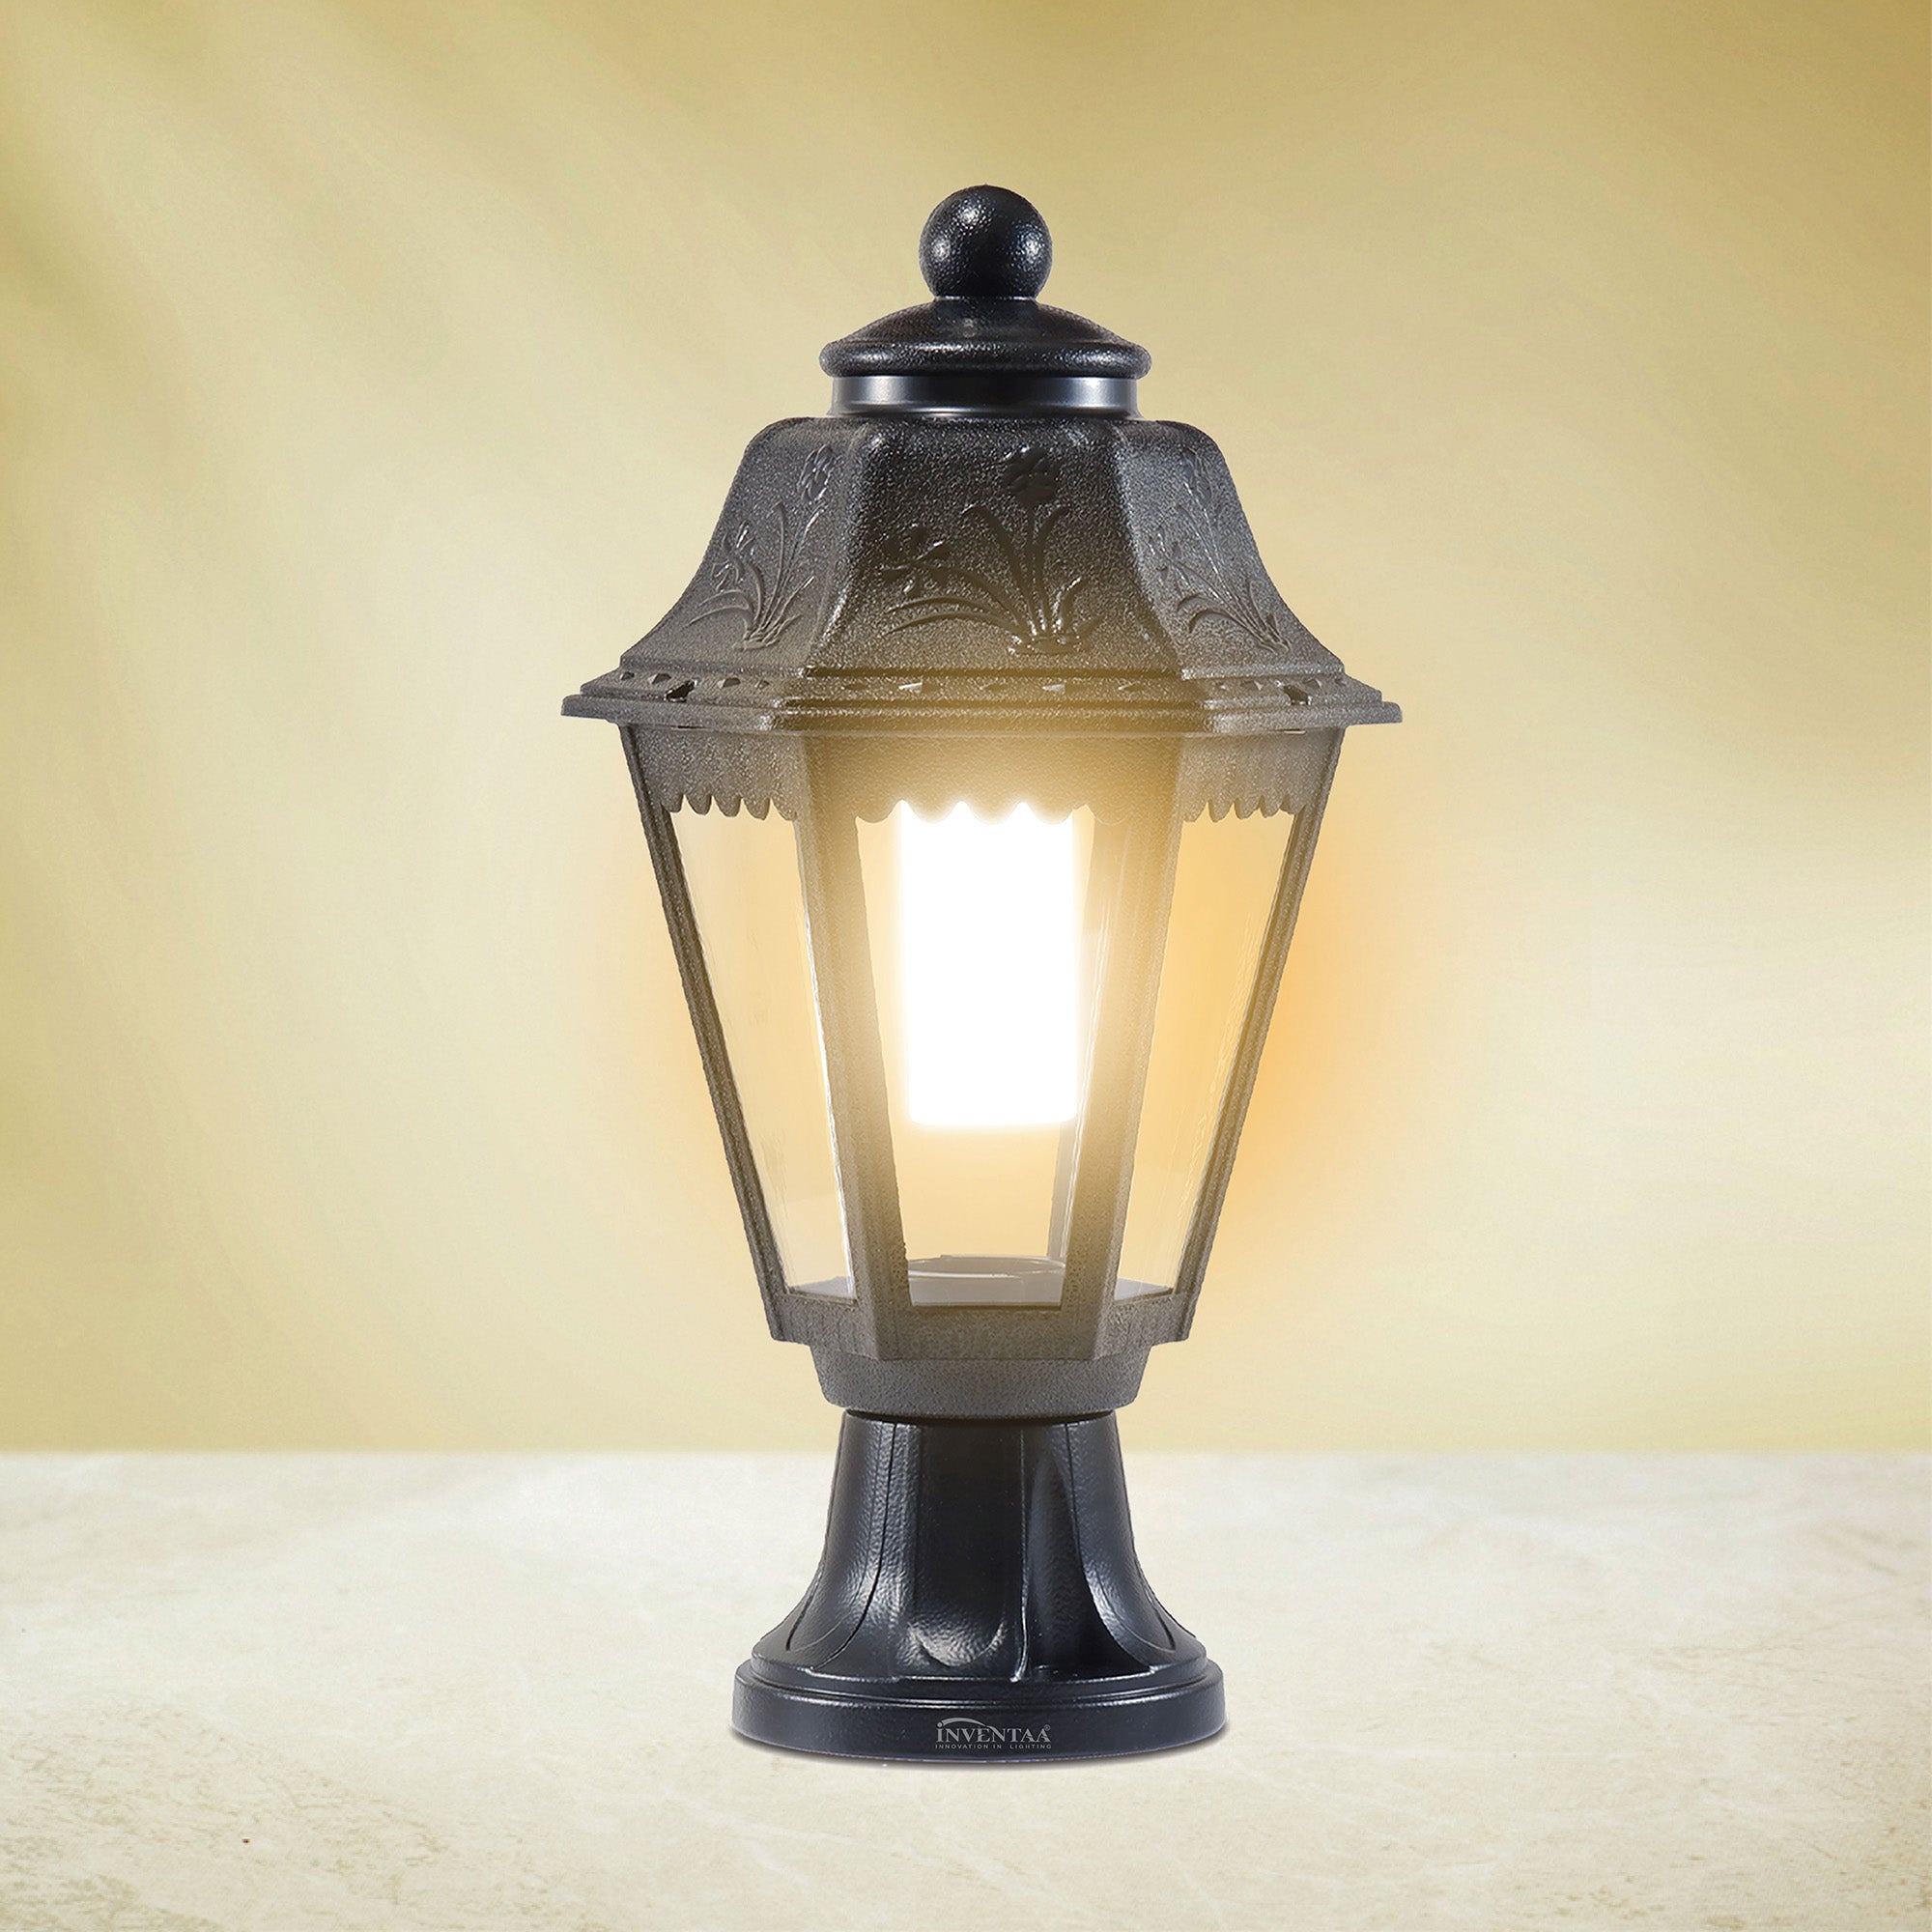 Tacita led gate light emitting warm white glow #bulb options_warm